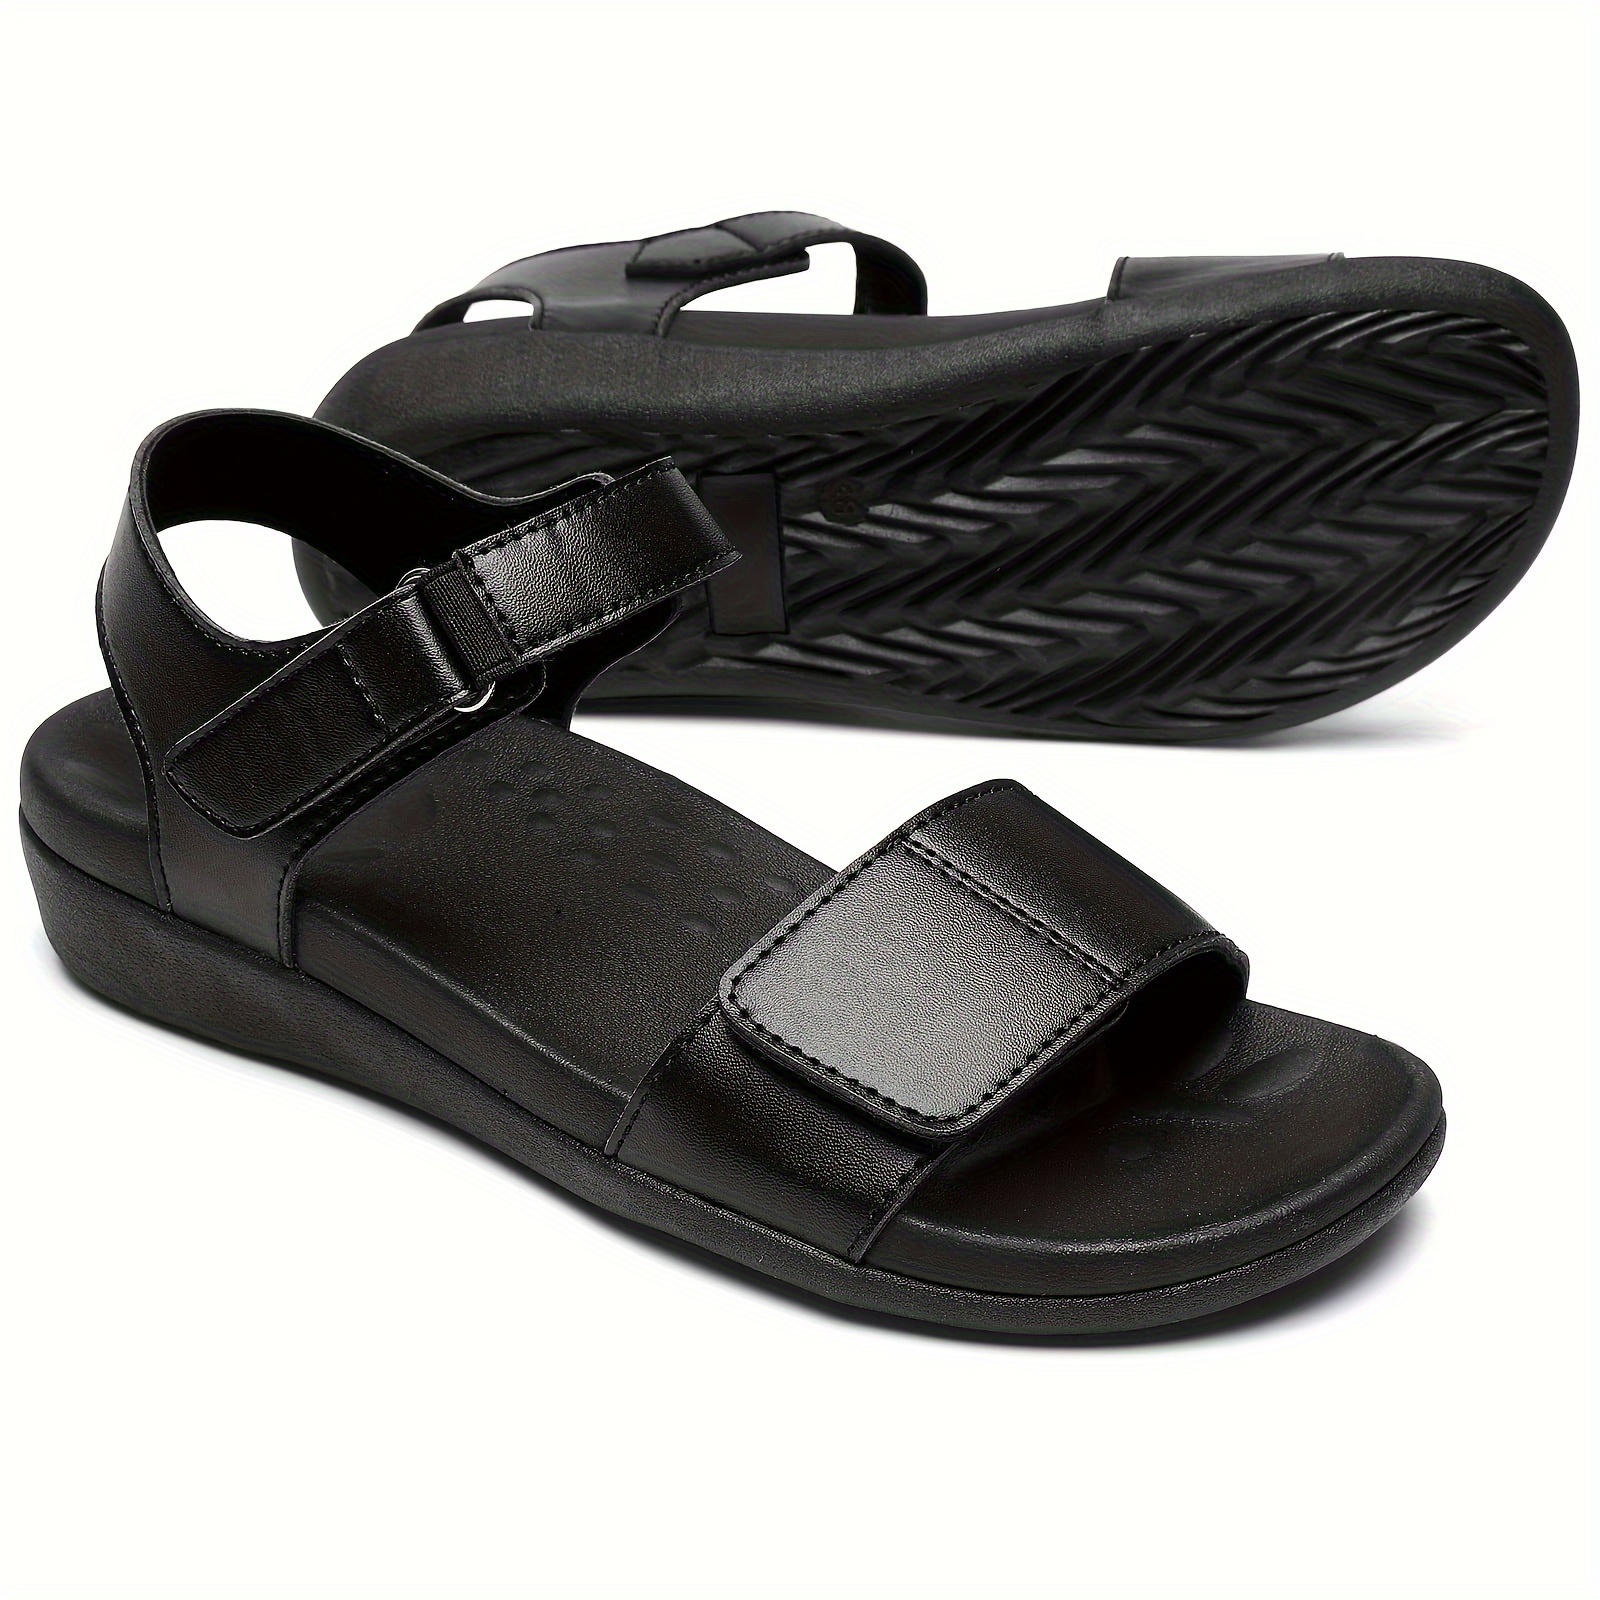 

Megnya Women's Sandals With Arch Support, Comfy Open Toe Summer Sporty Sandals, Lightweight Travel Walking Beach Outdoor Sandals